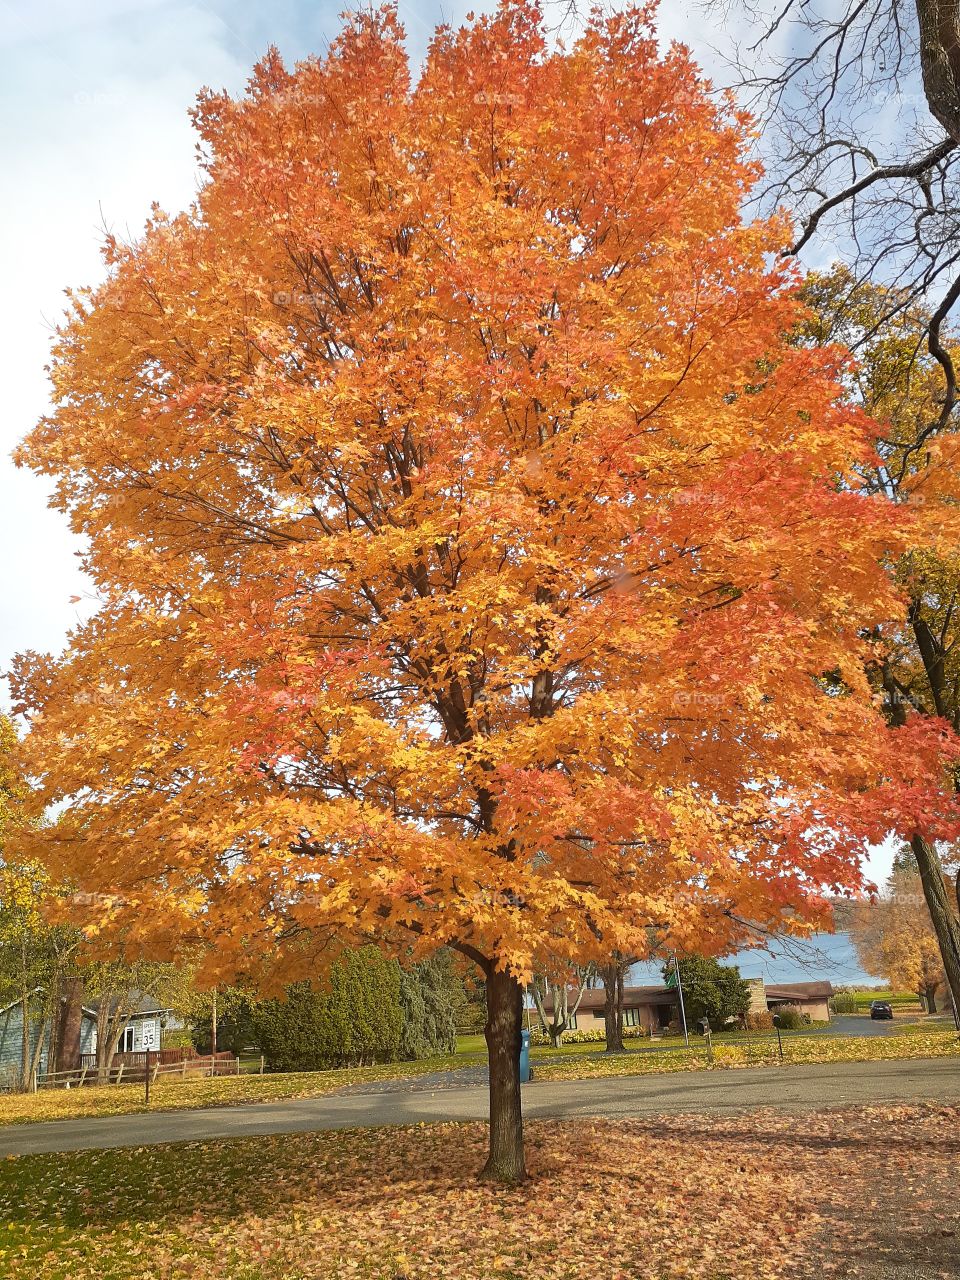 orange fall tree in it's glory